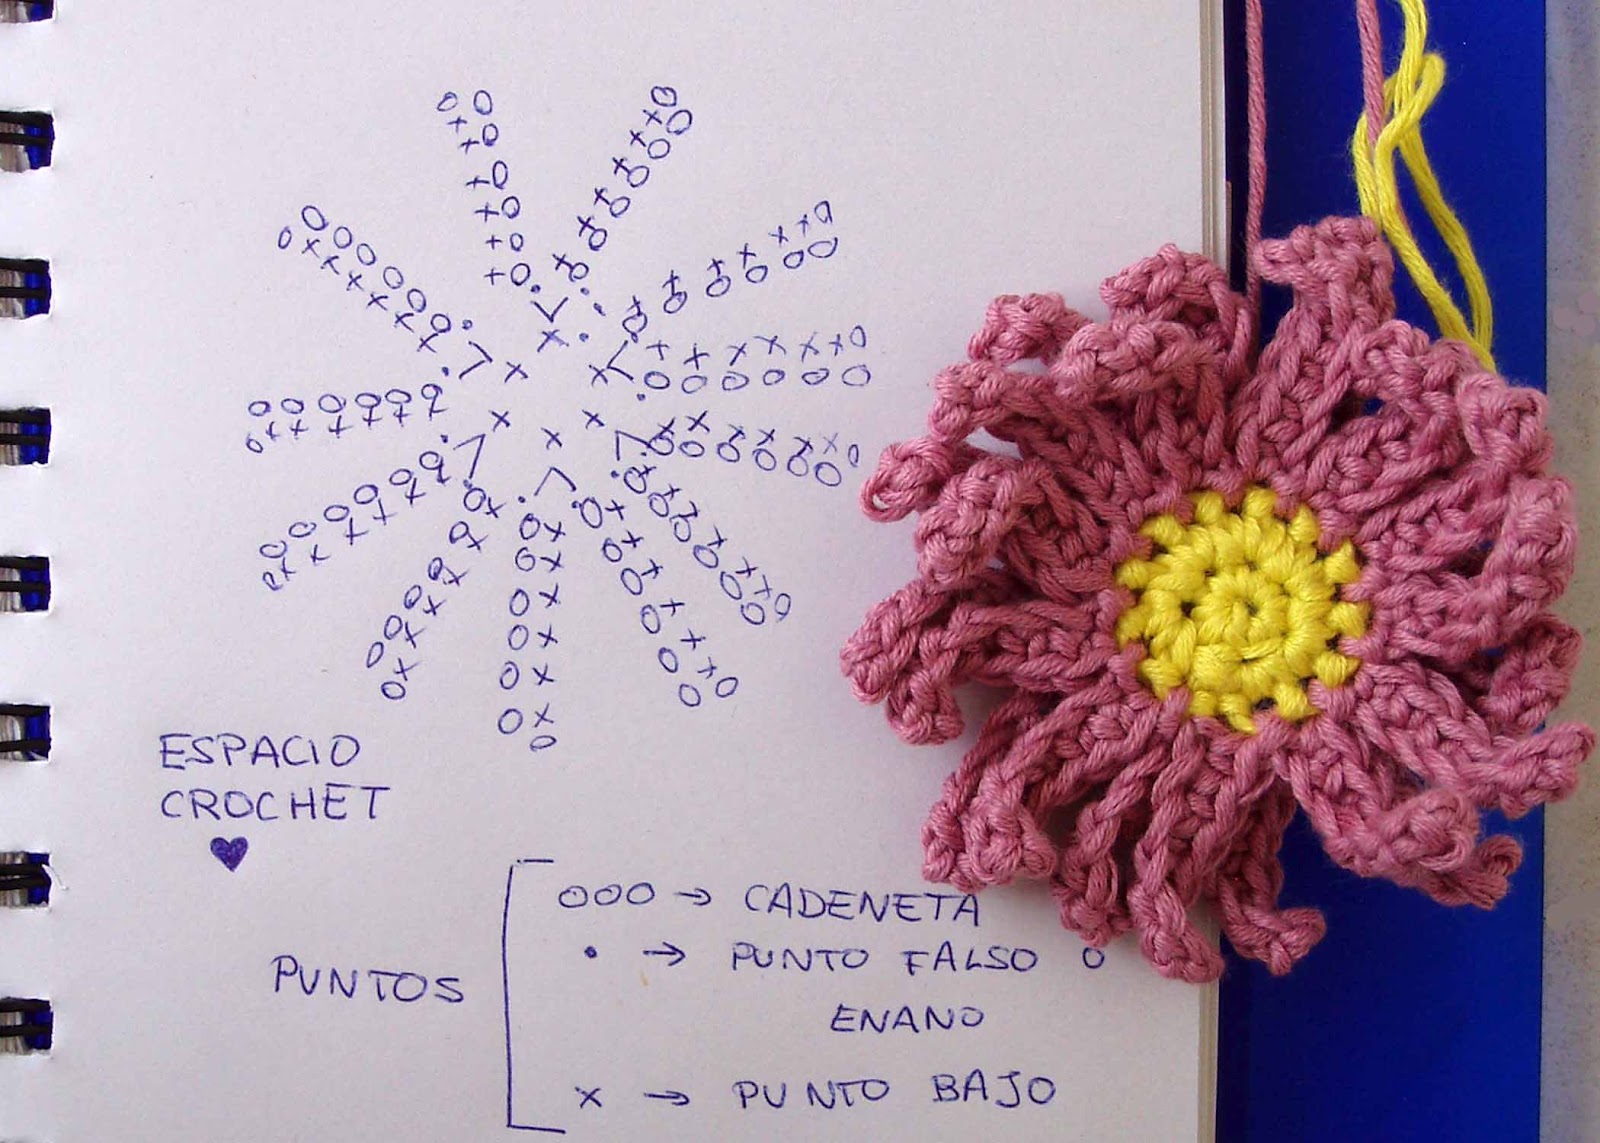 Espacio Crochet: Flor de crochet